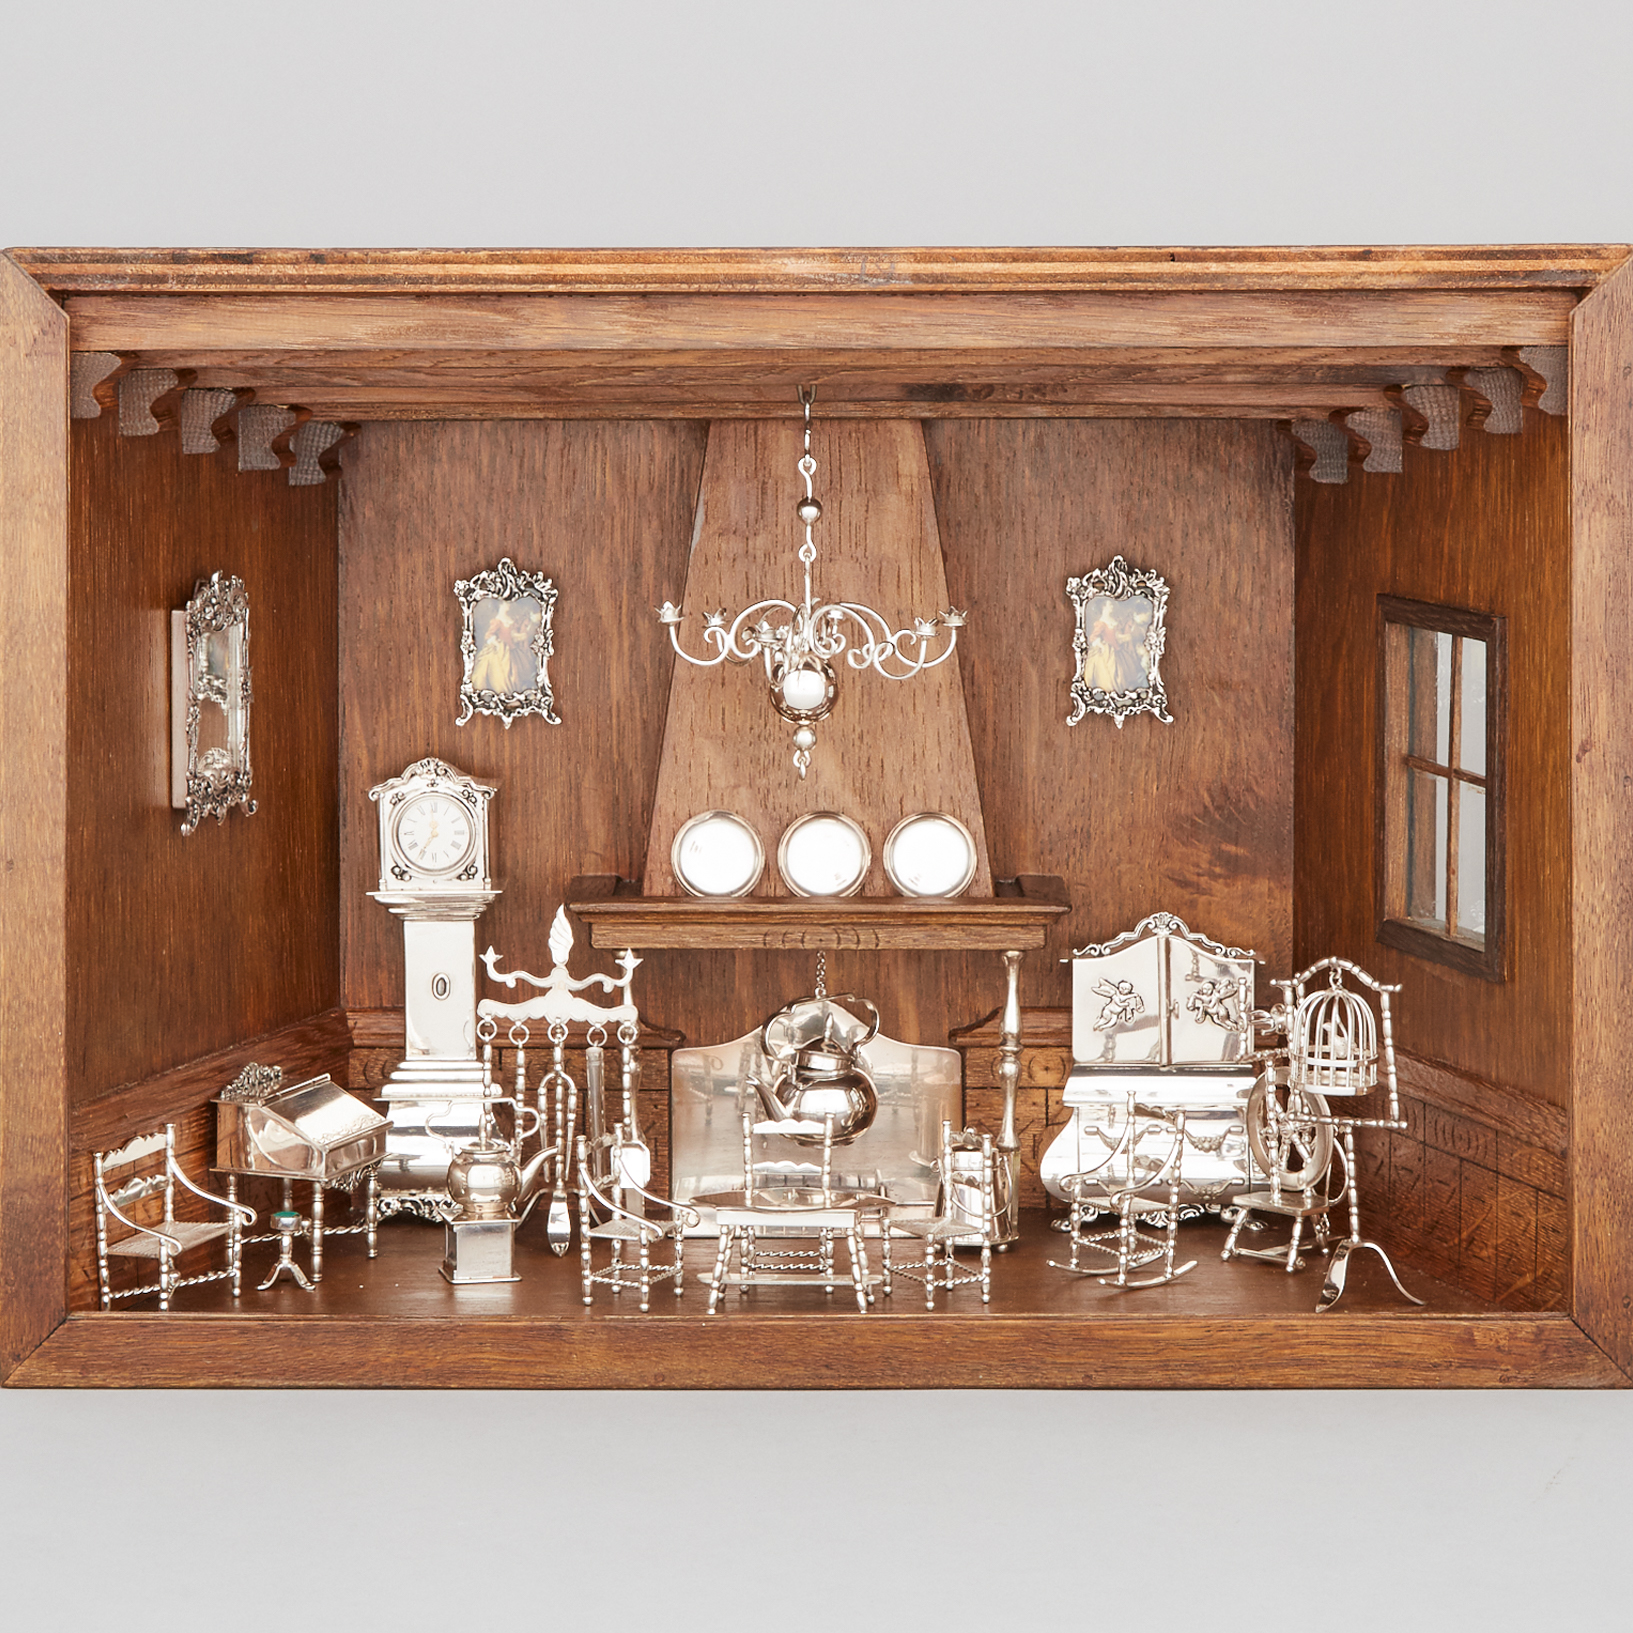 Dutch Silver Miniature Living Room Diorama, H. Hooijkaas, Schoonhoven, 20th century